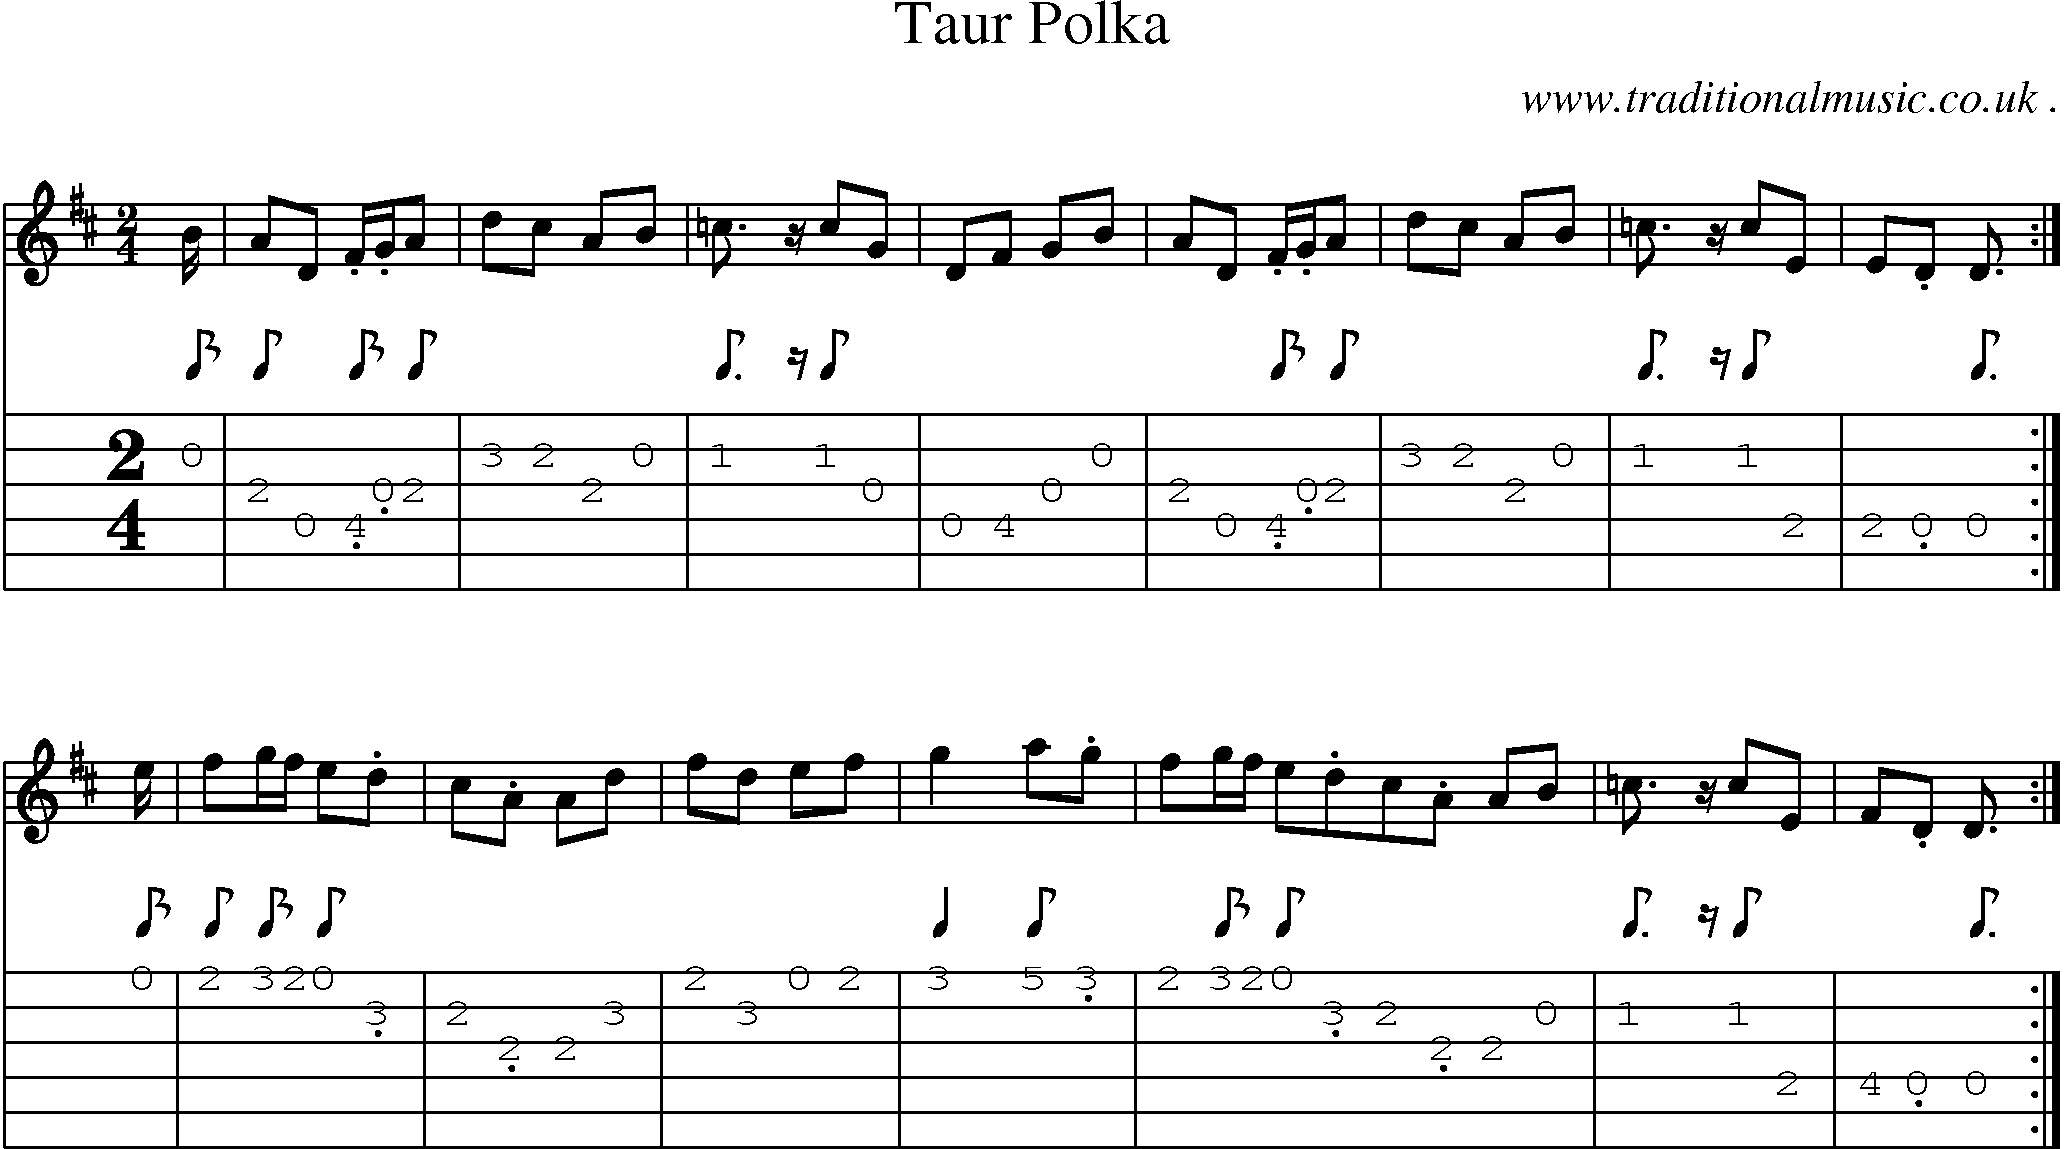 Sheet-Music and Guitar Tabs for Taur Polka